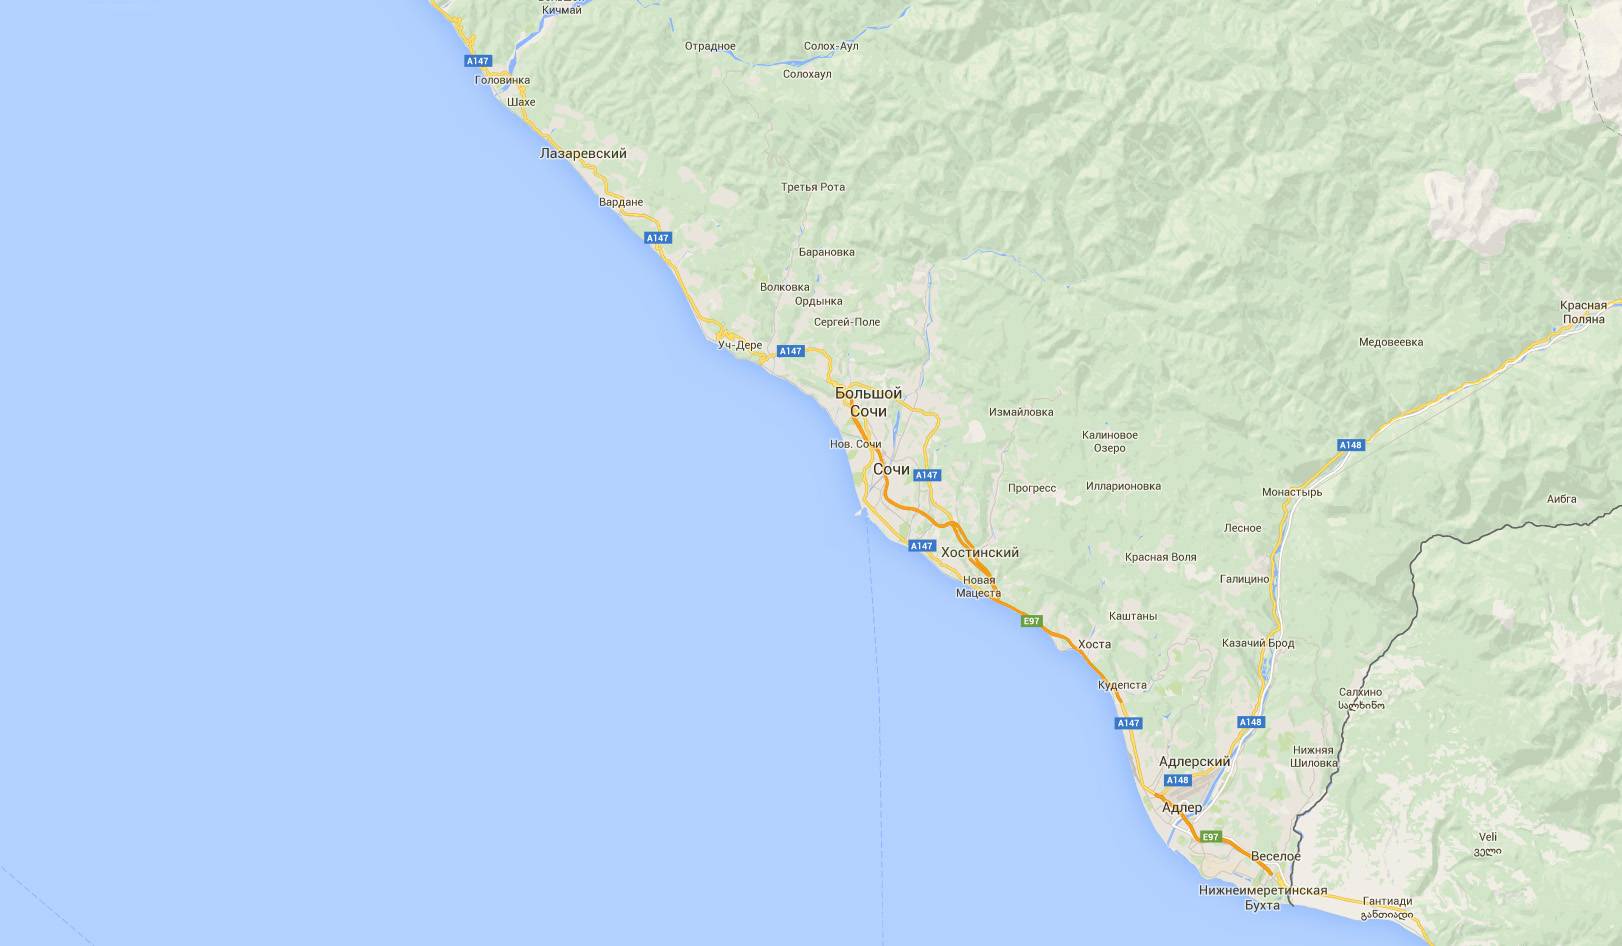 Инал бухта на карте черноморского побережья фото с описанием